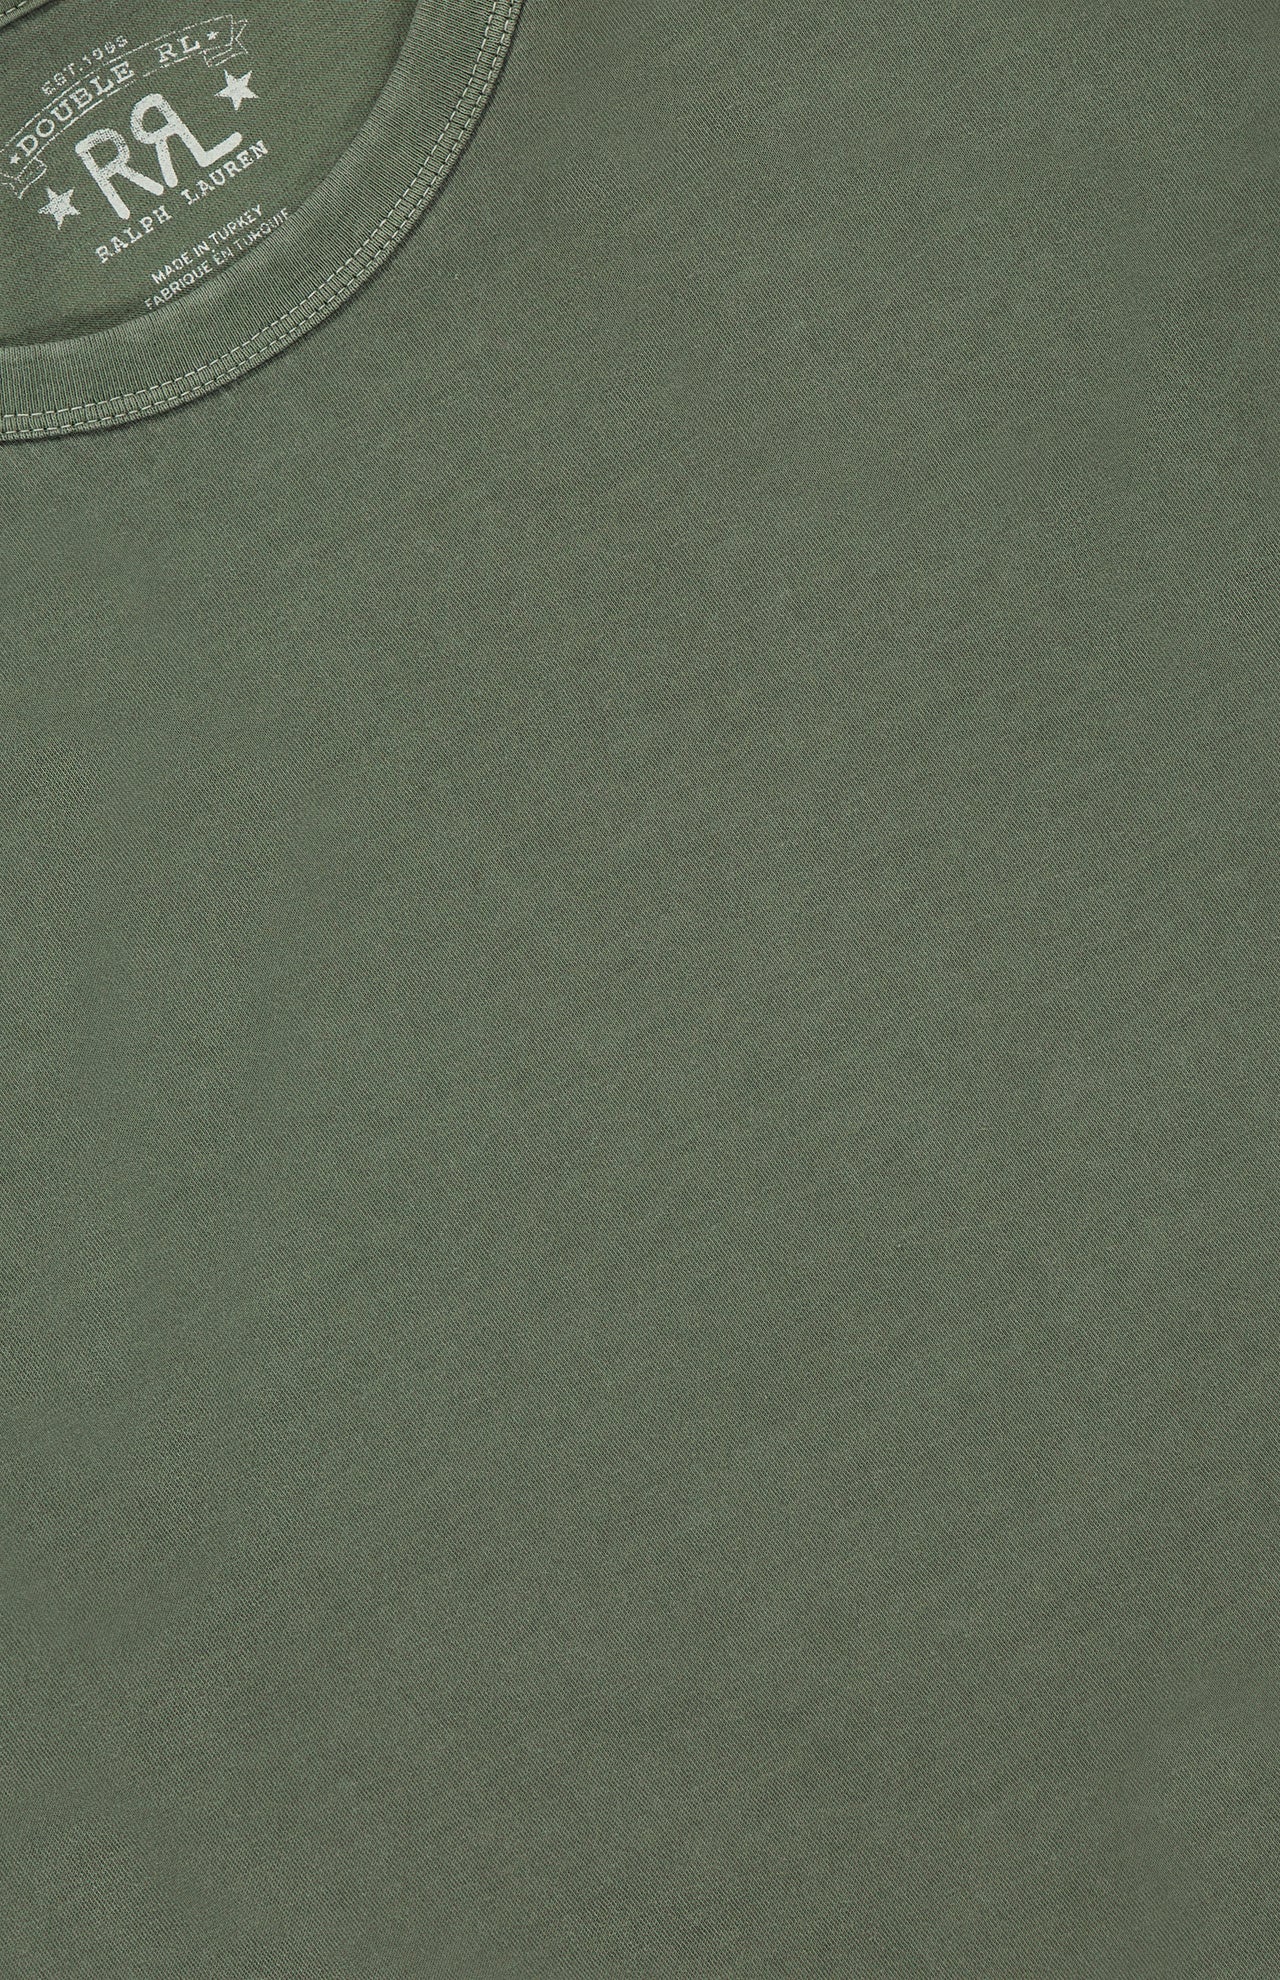 Short Sleeve Crewneck T-Shirt (7352831475827)